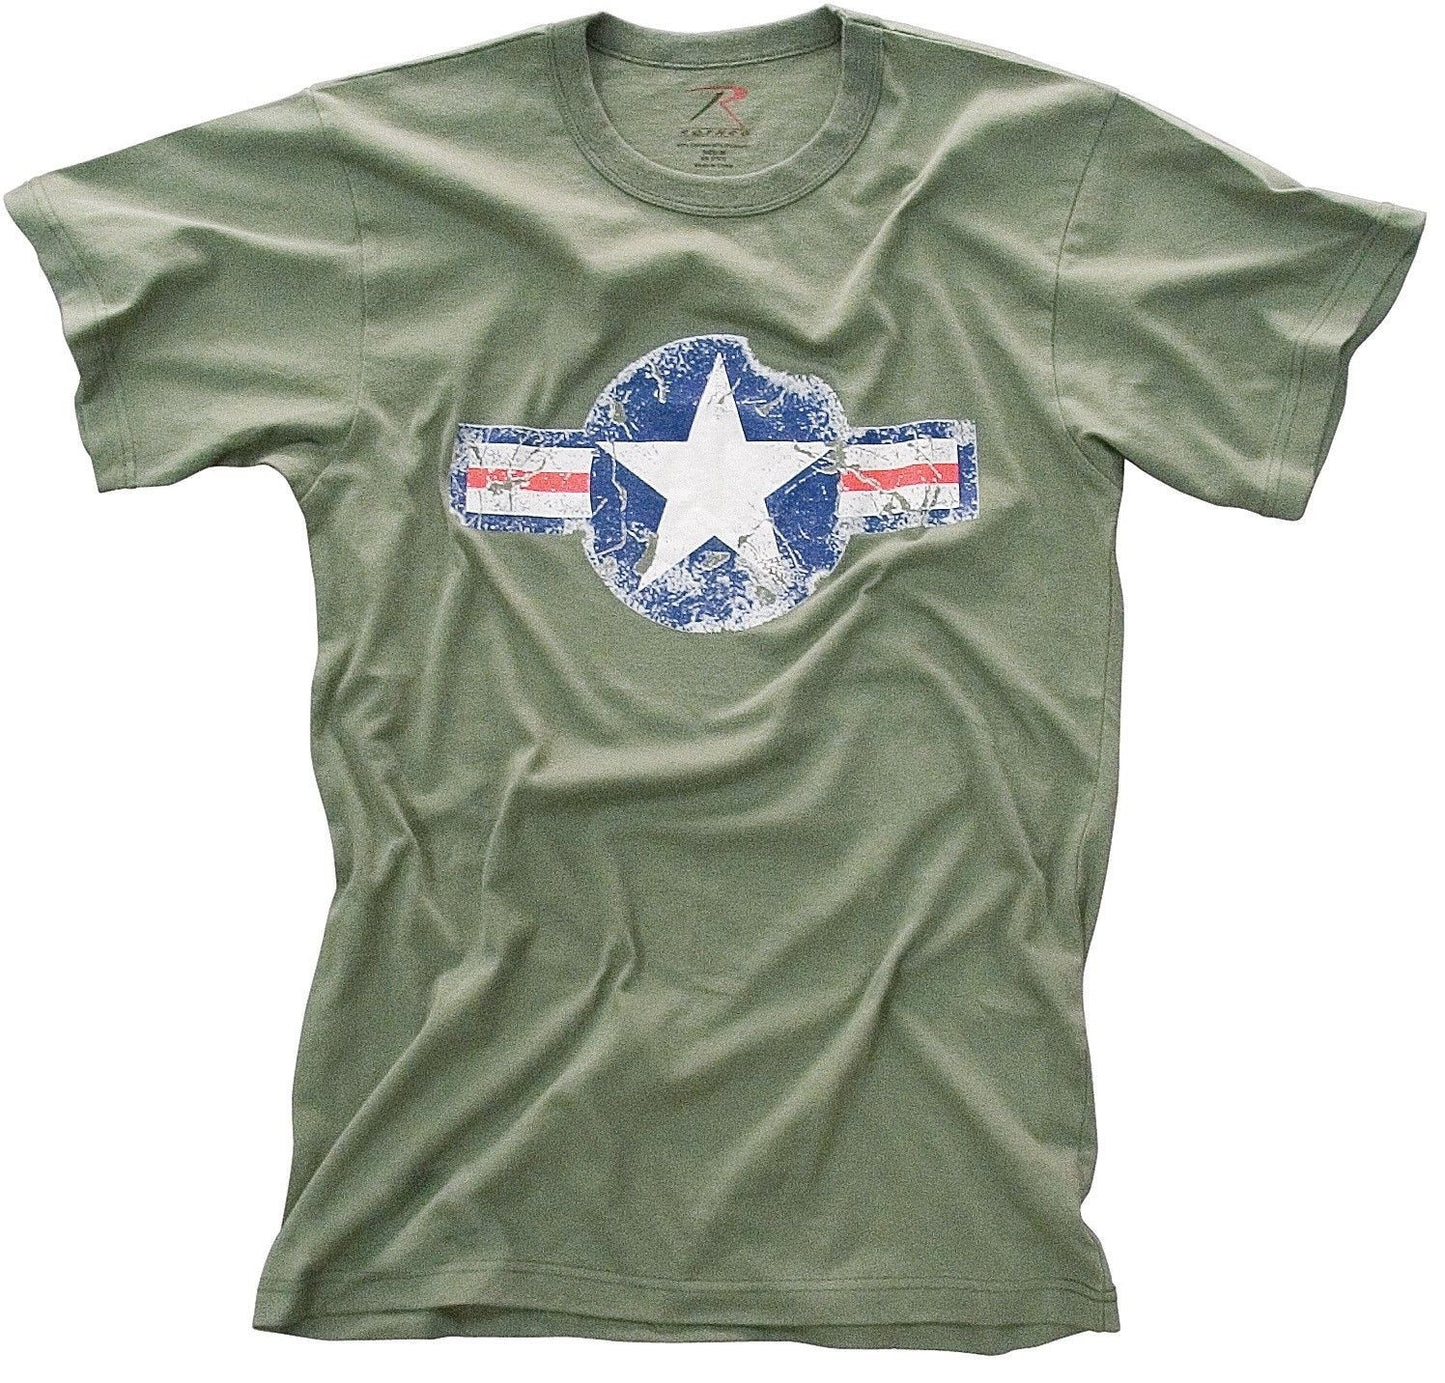 Vintage Army Air Corp Olive Drab T-Shirt Retro